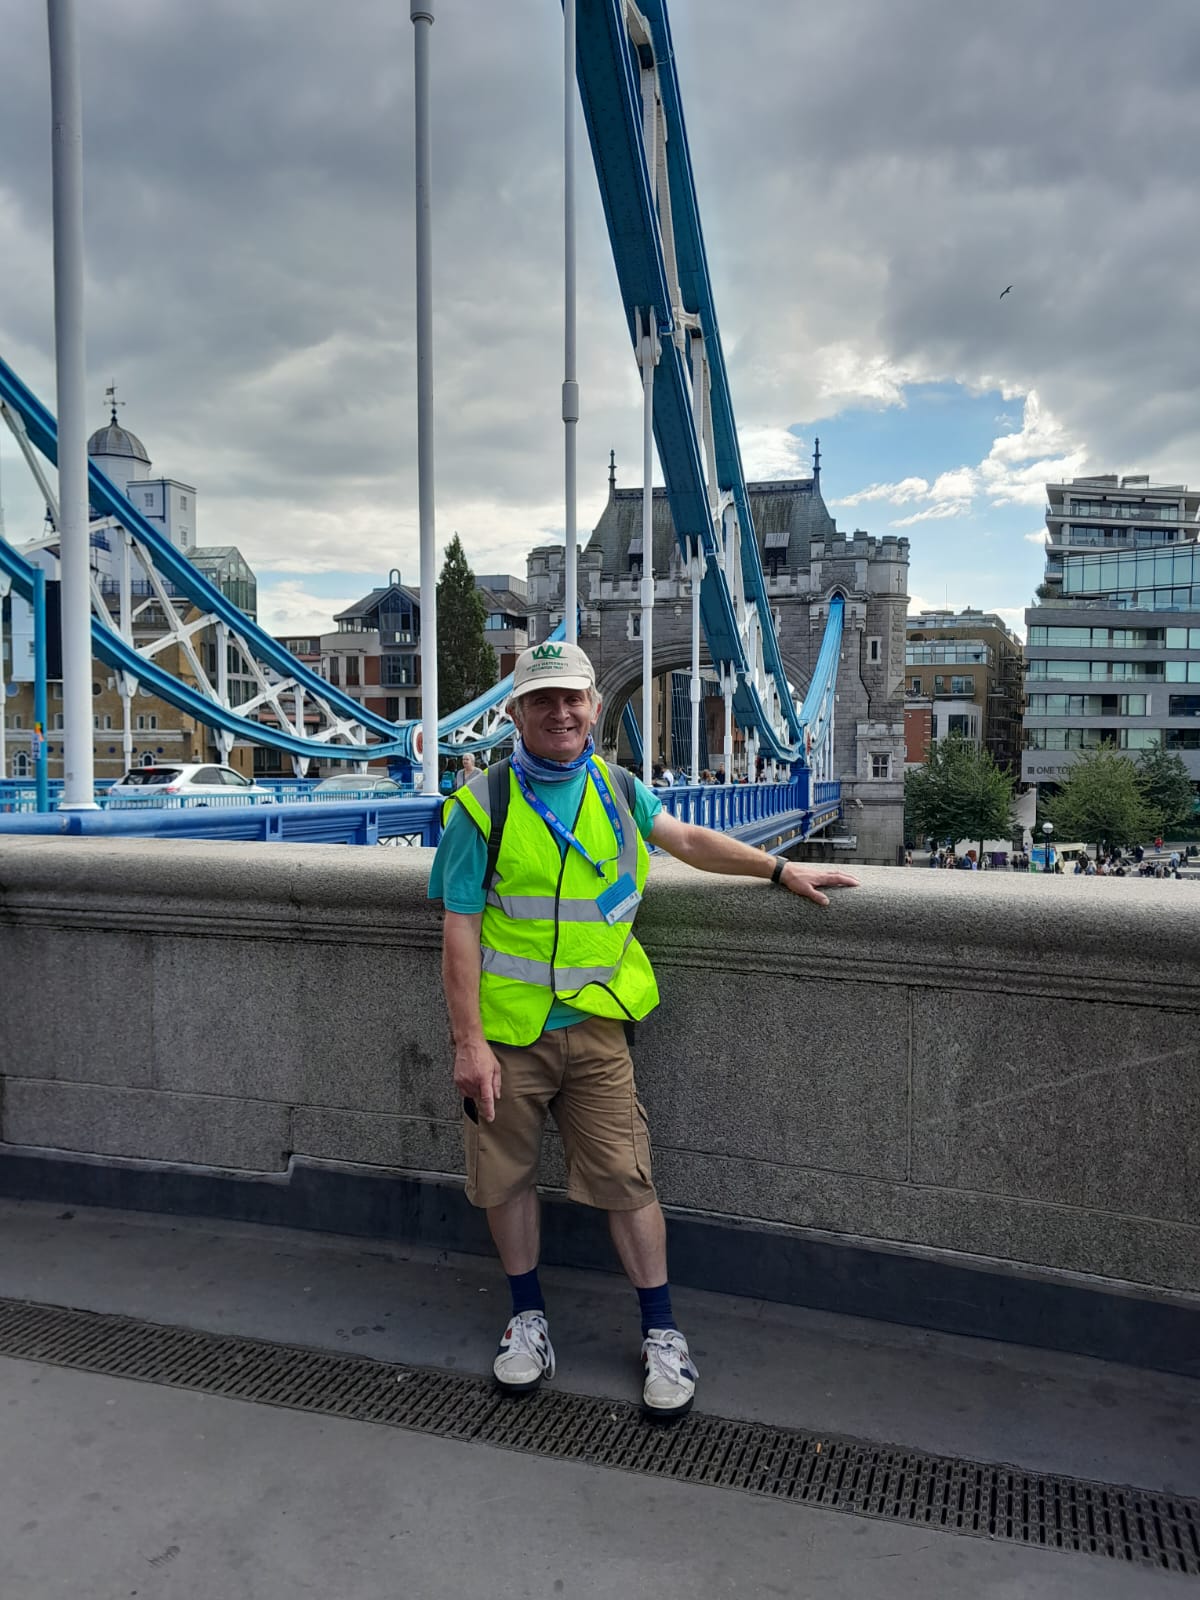 Luke on Tower Bridge